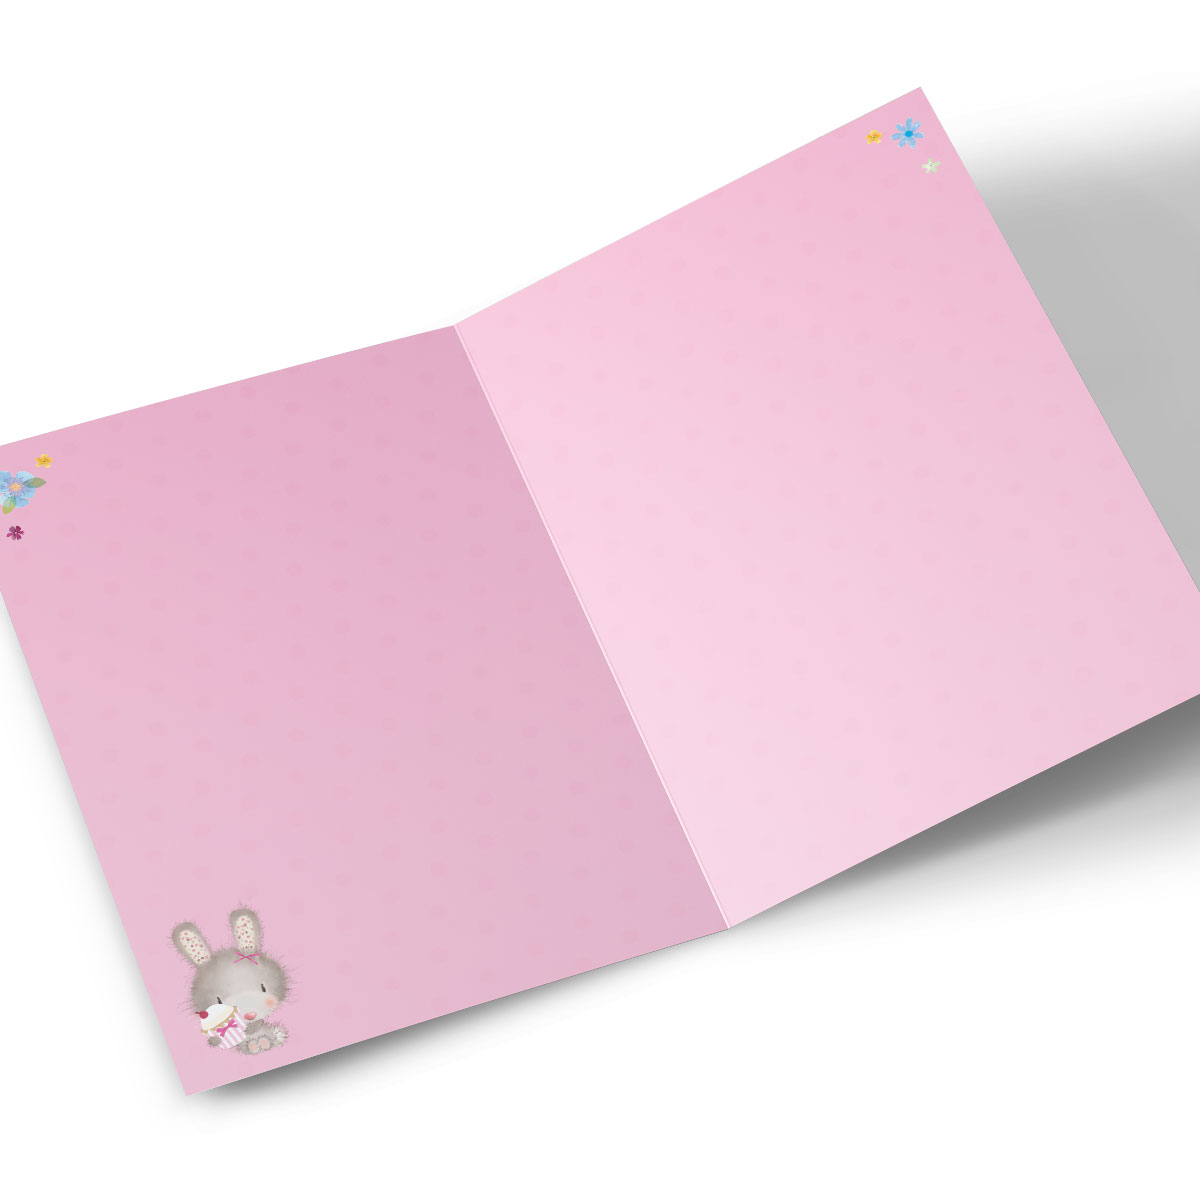 Personalised Birthday Card - Pink Floral Wreath